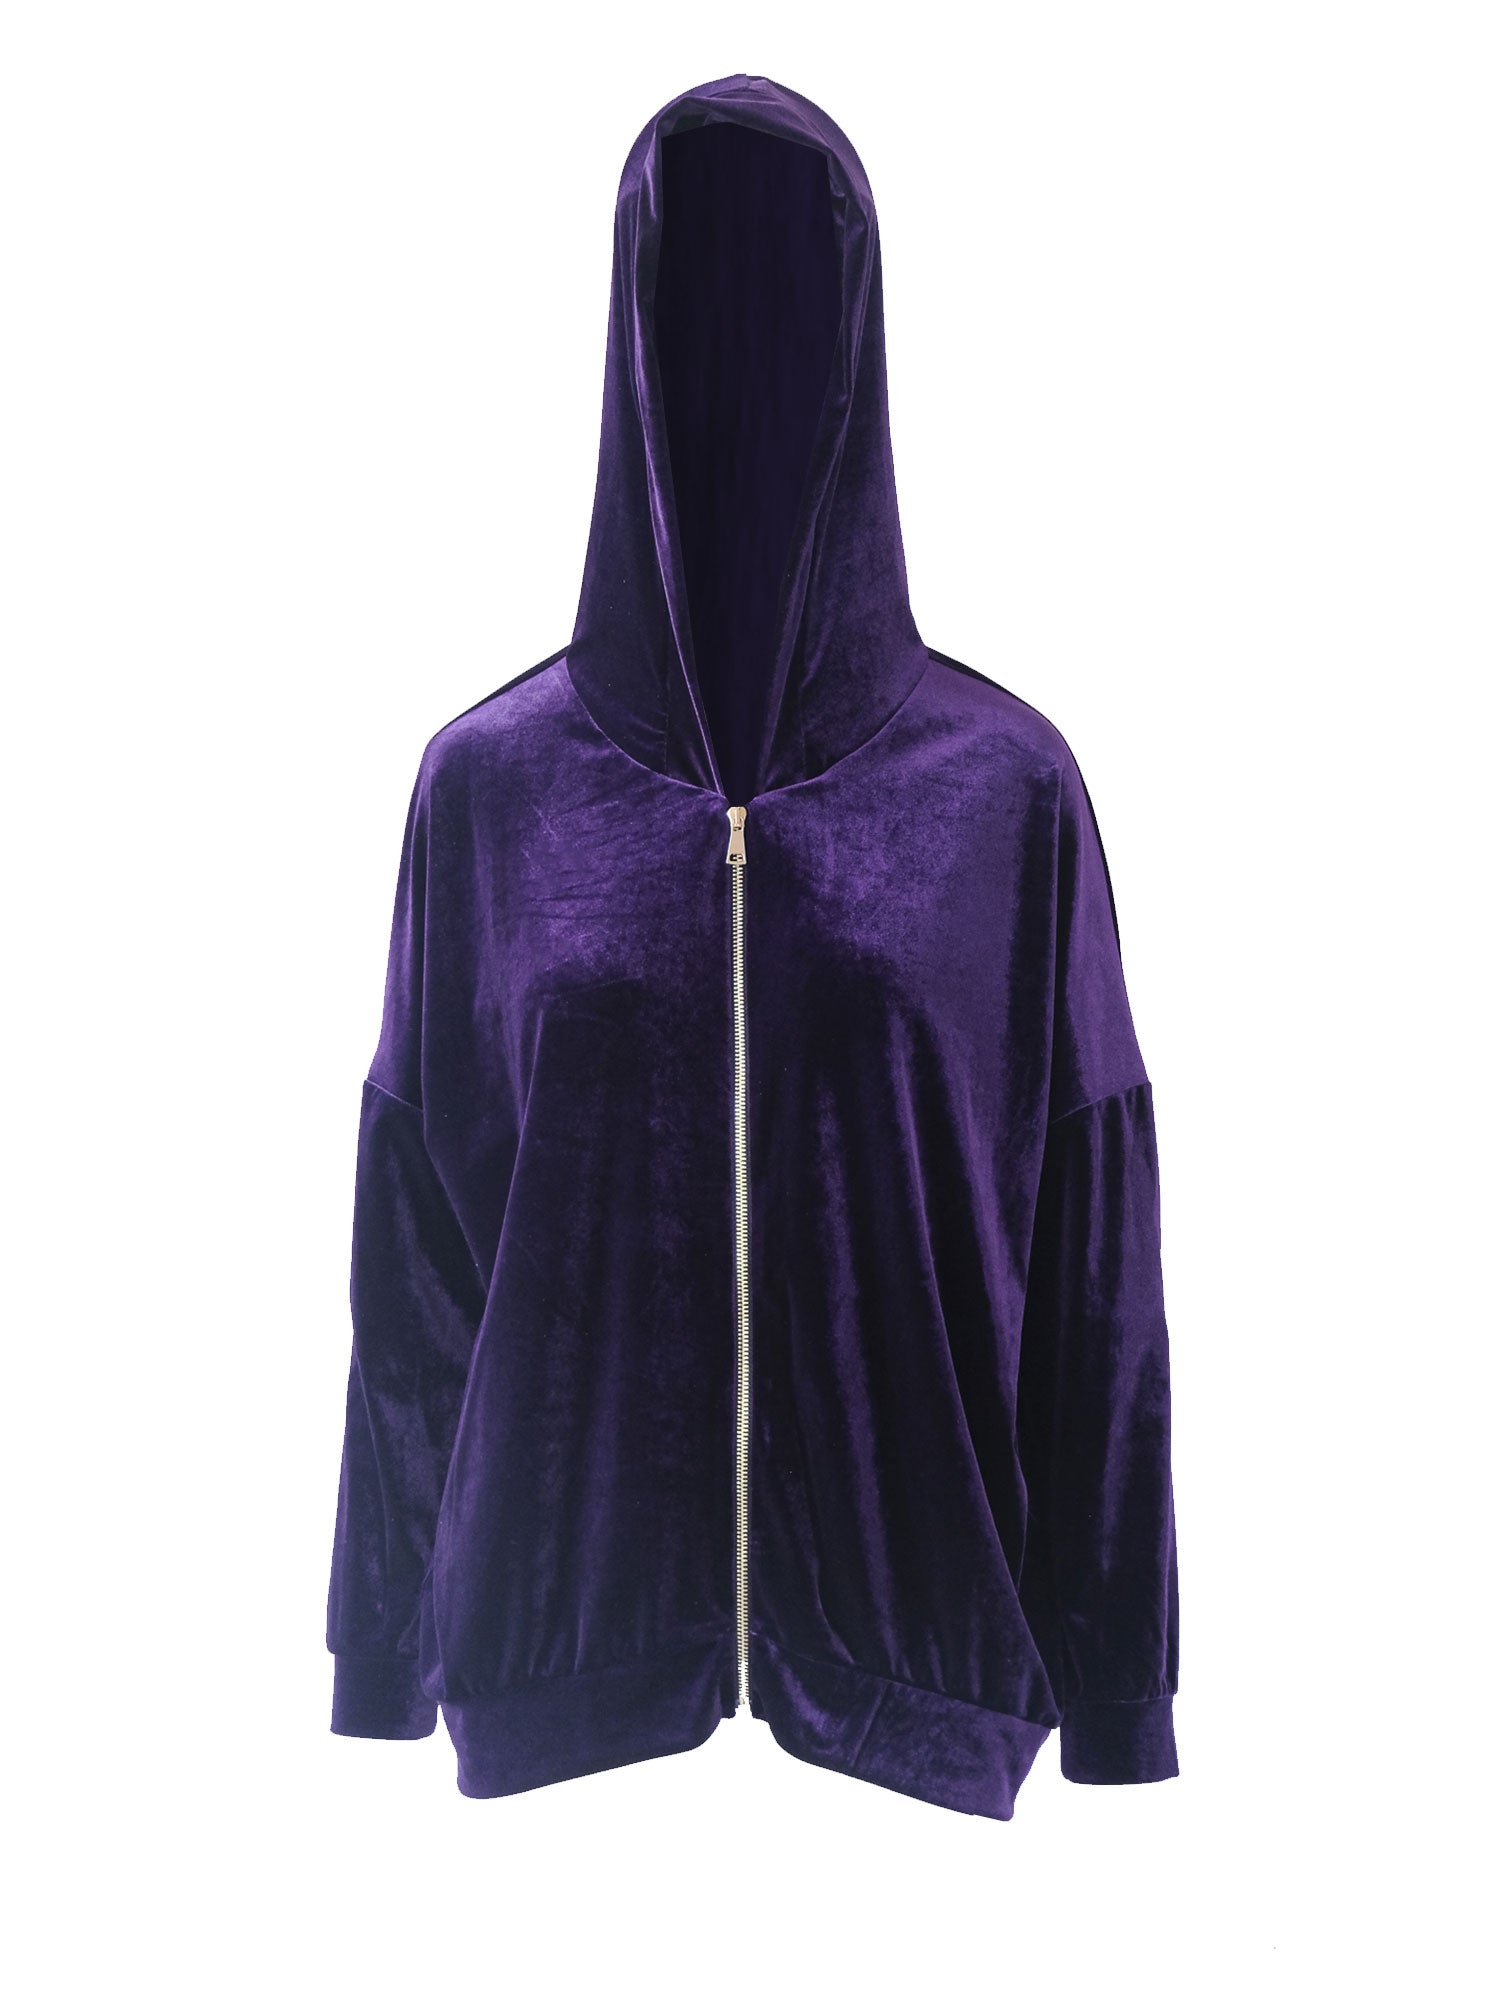 ADRIEN - purple chenille hoodie